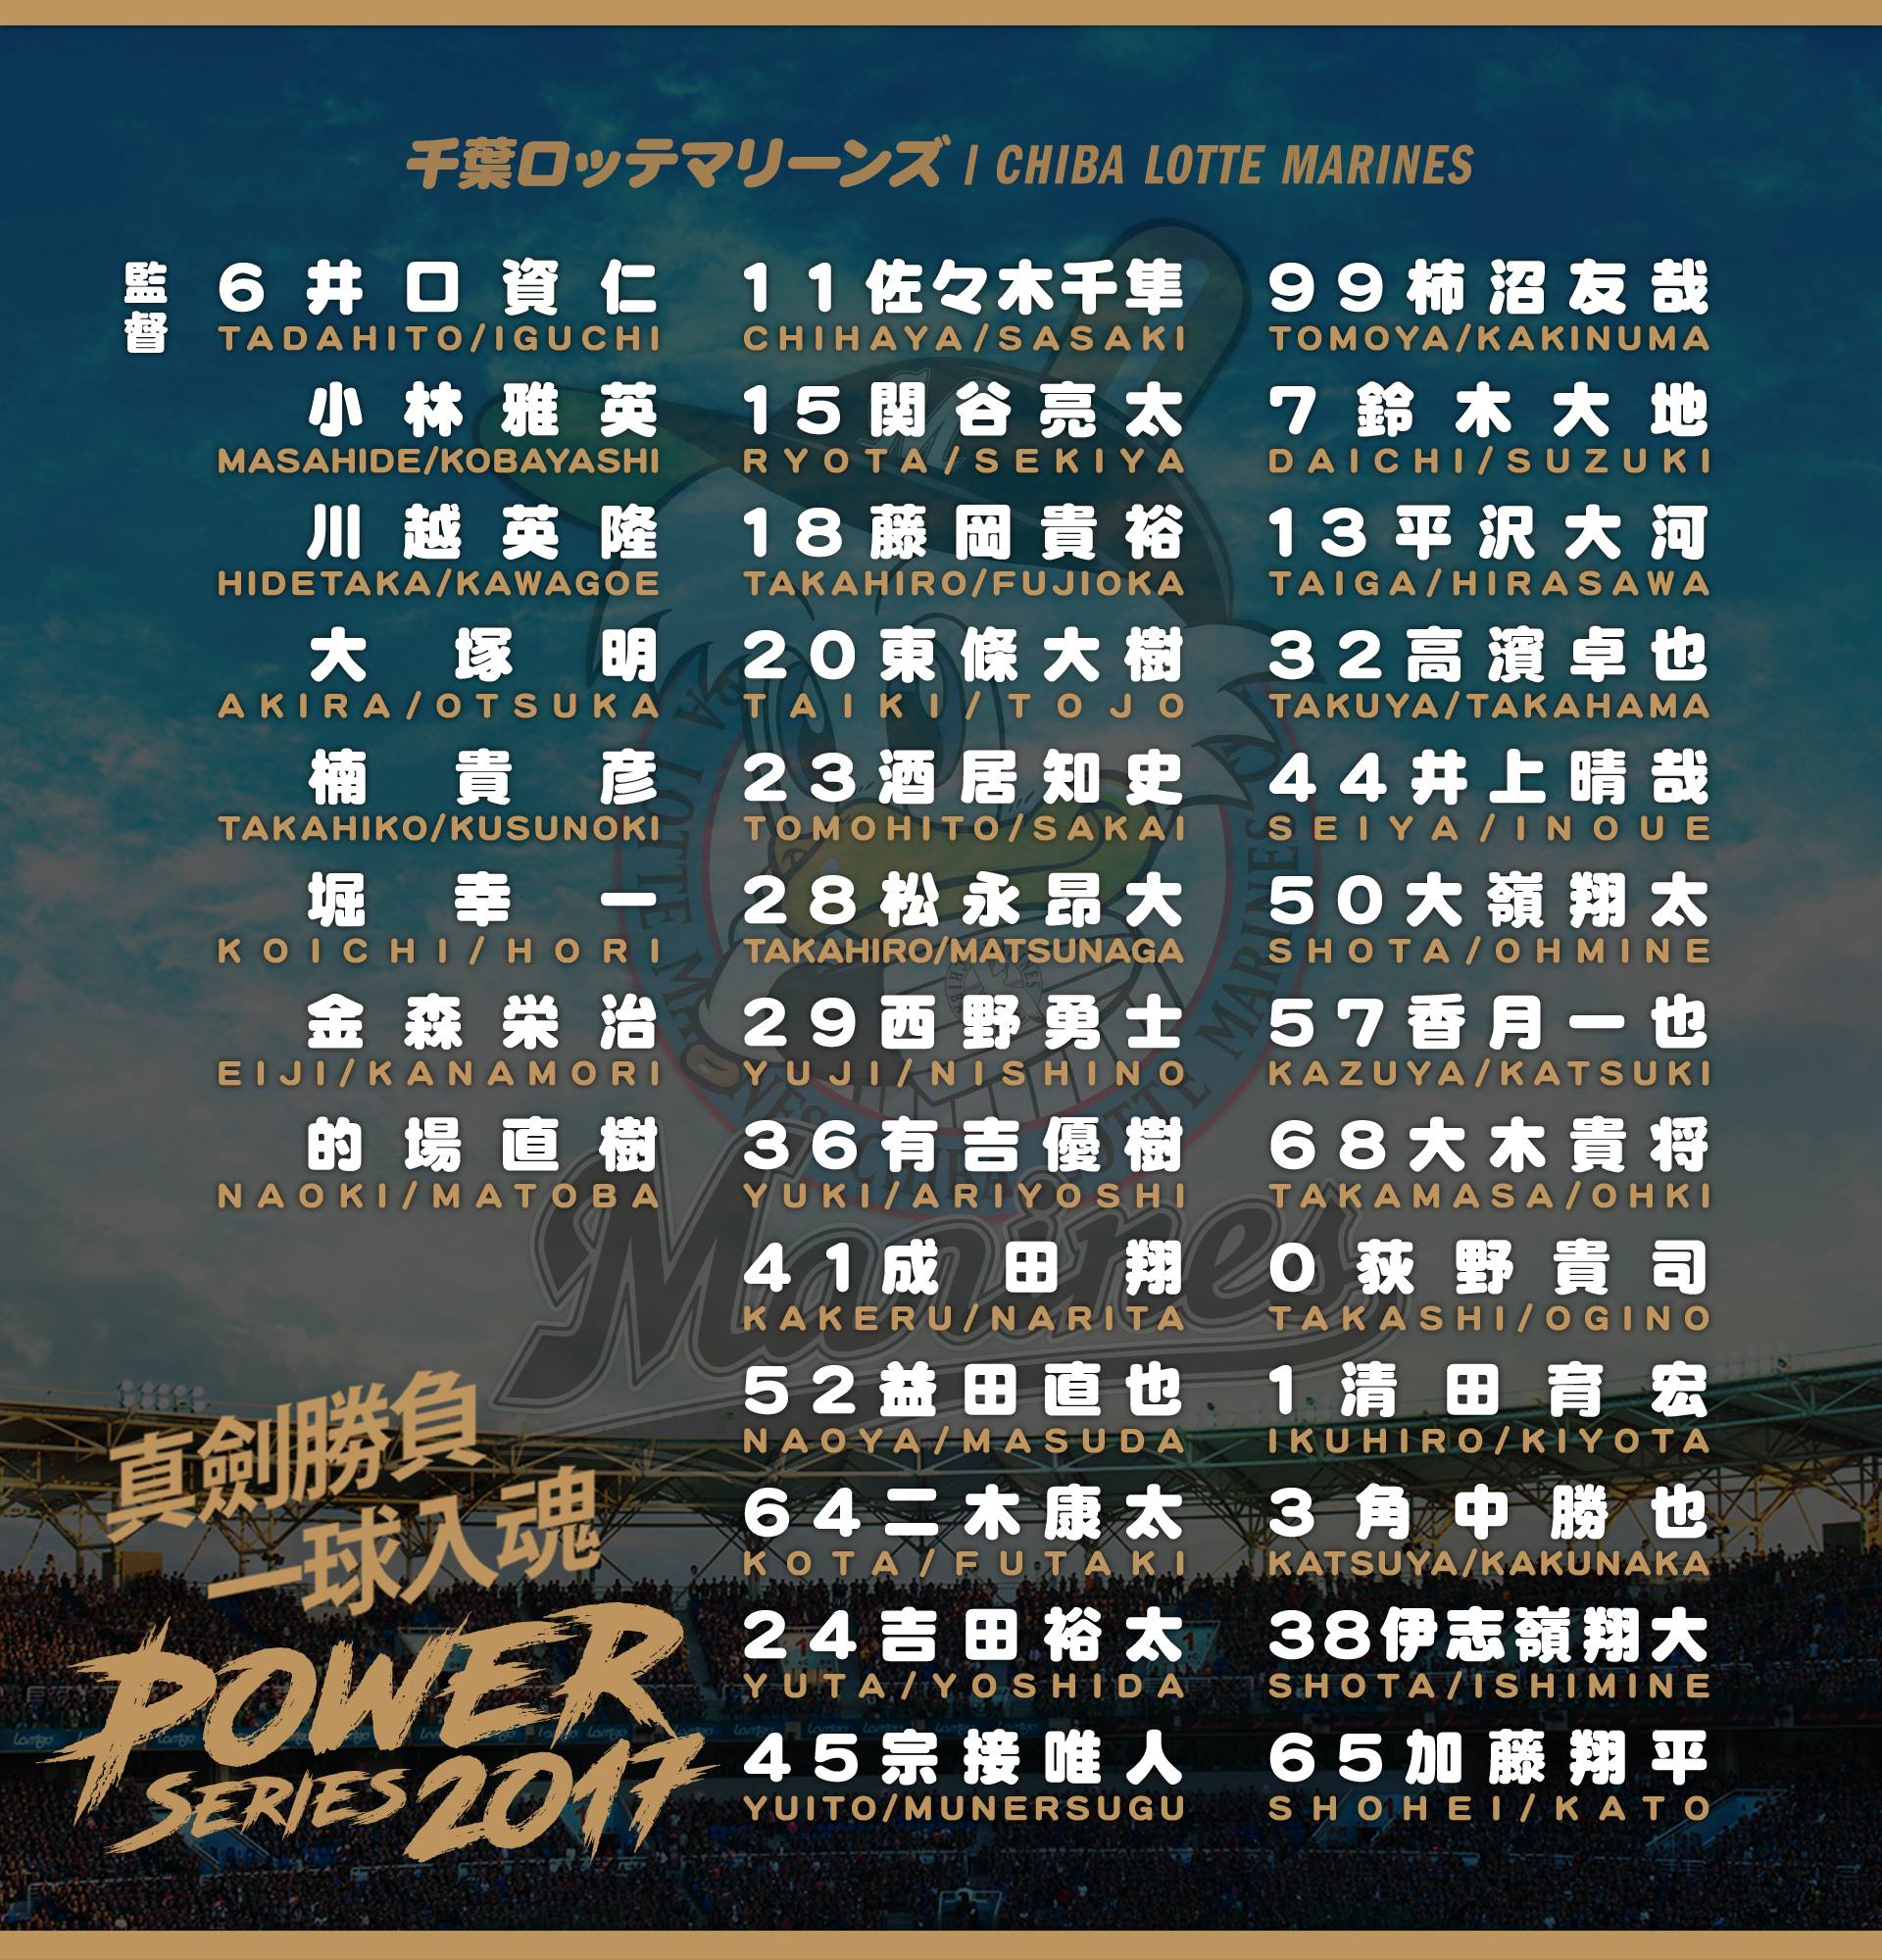 Chiba Lotte Marines roster vs CPBL U24